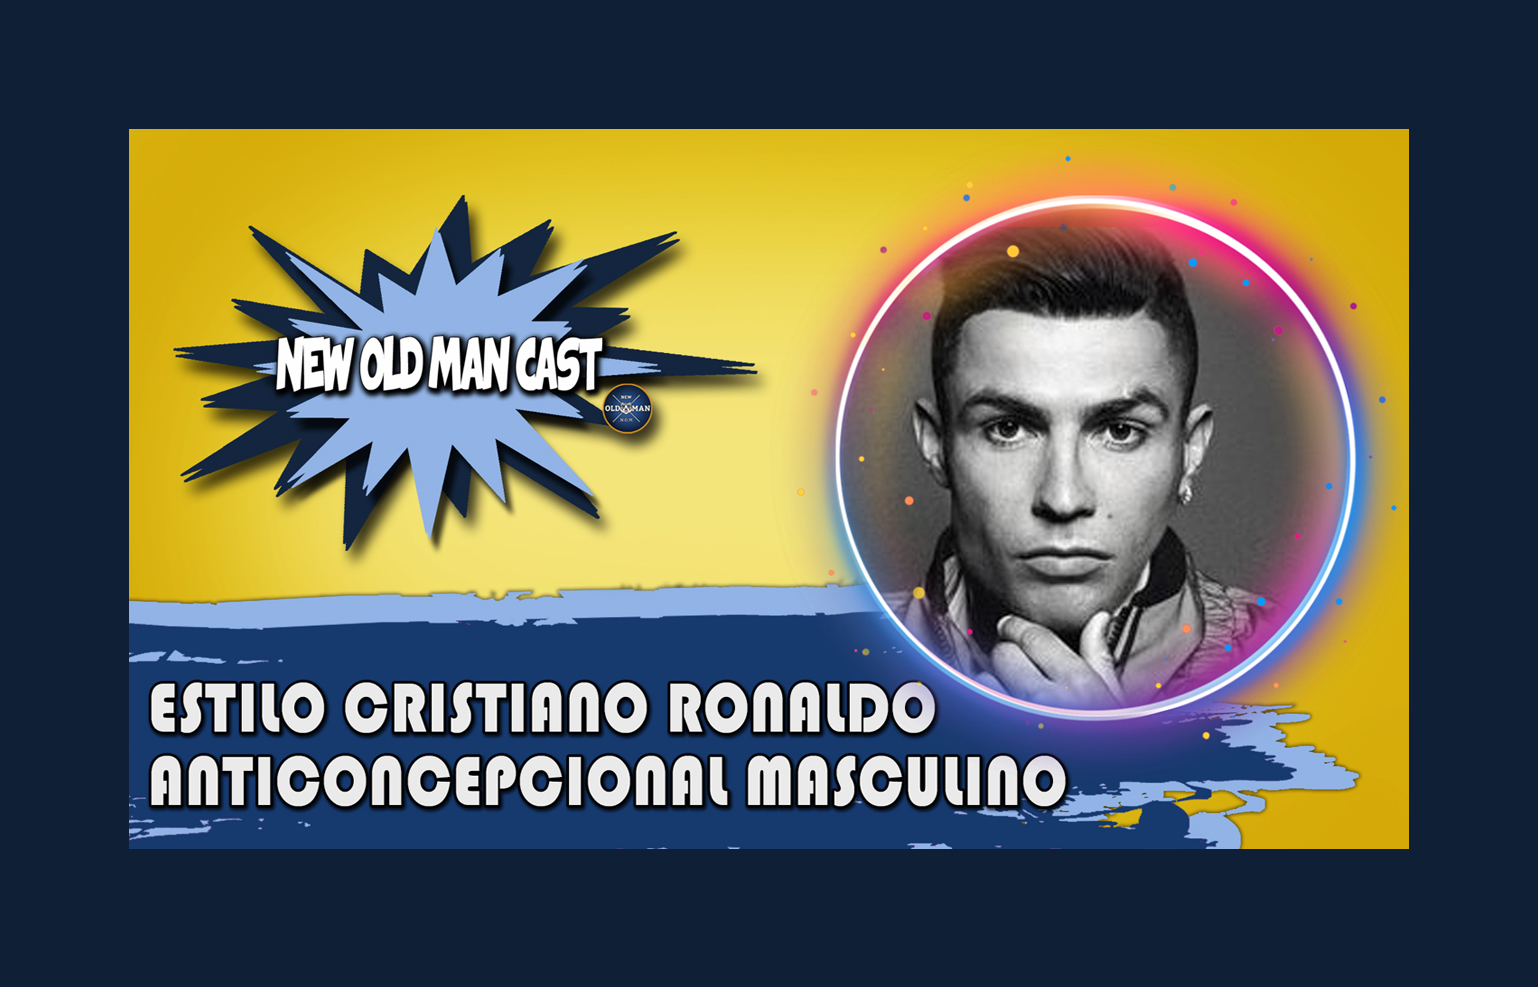 New Old Man Cast #21 - Tudo Sobre Anticoncepcional Masculino - Análise de Estilo Cristiano Ronaldo